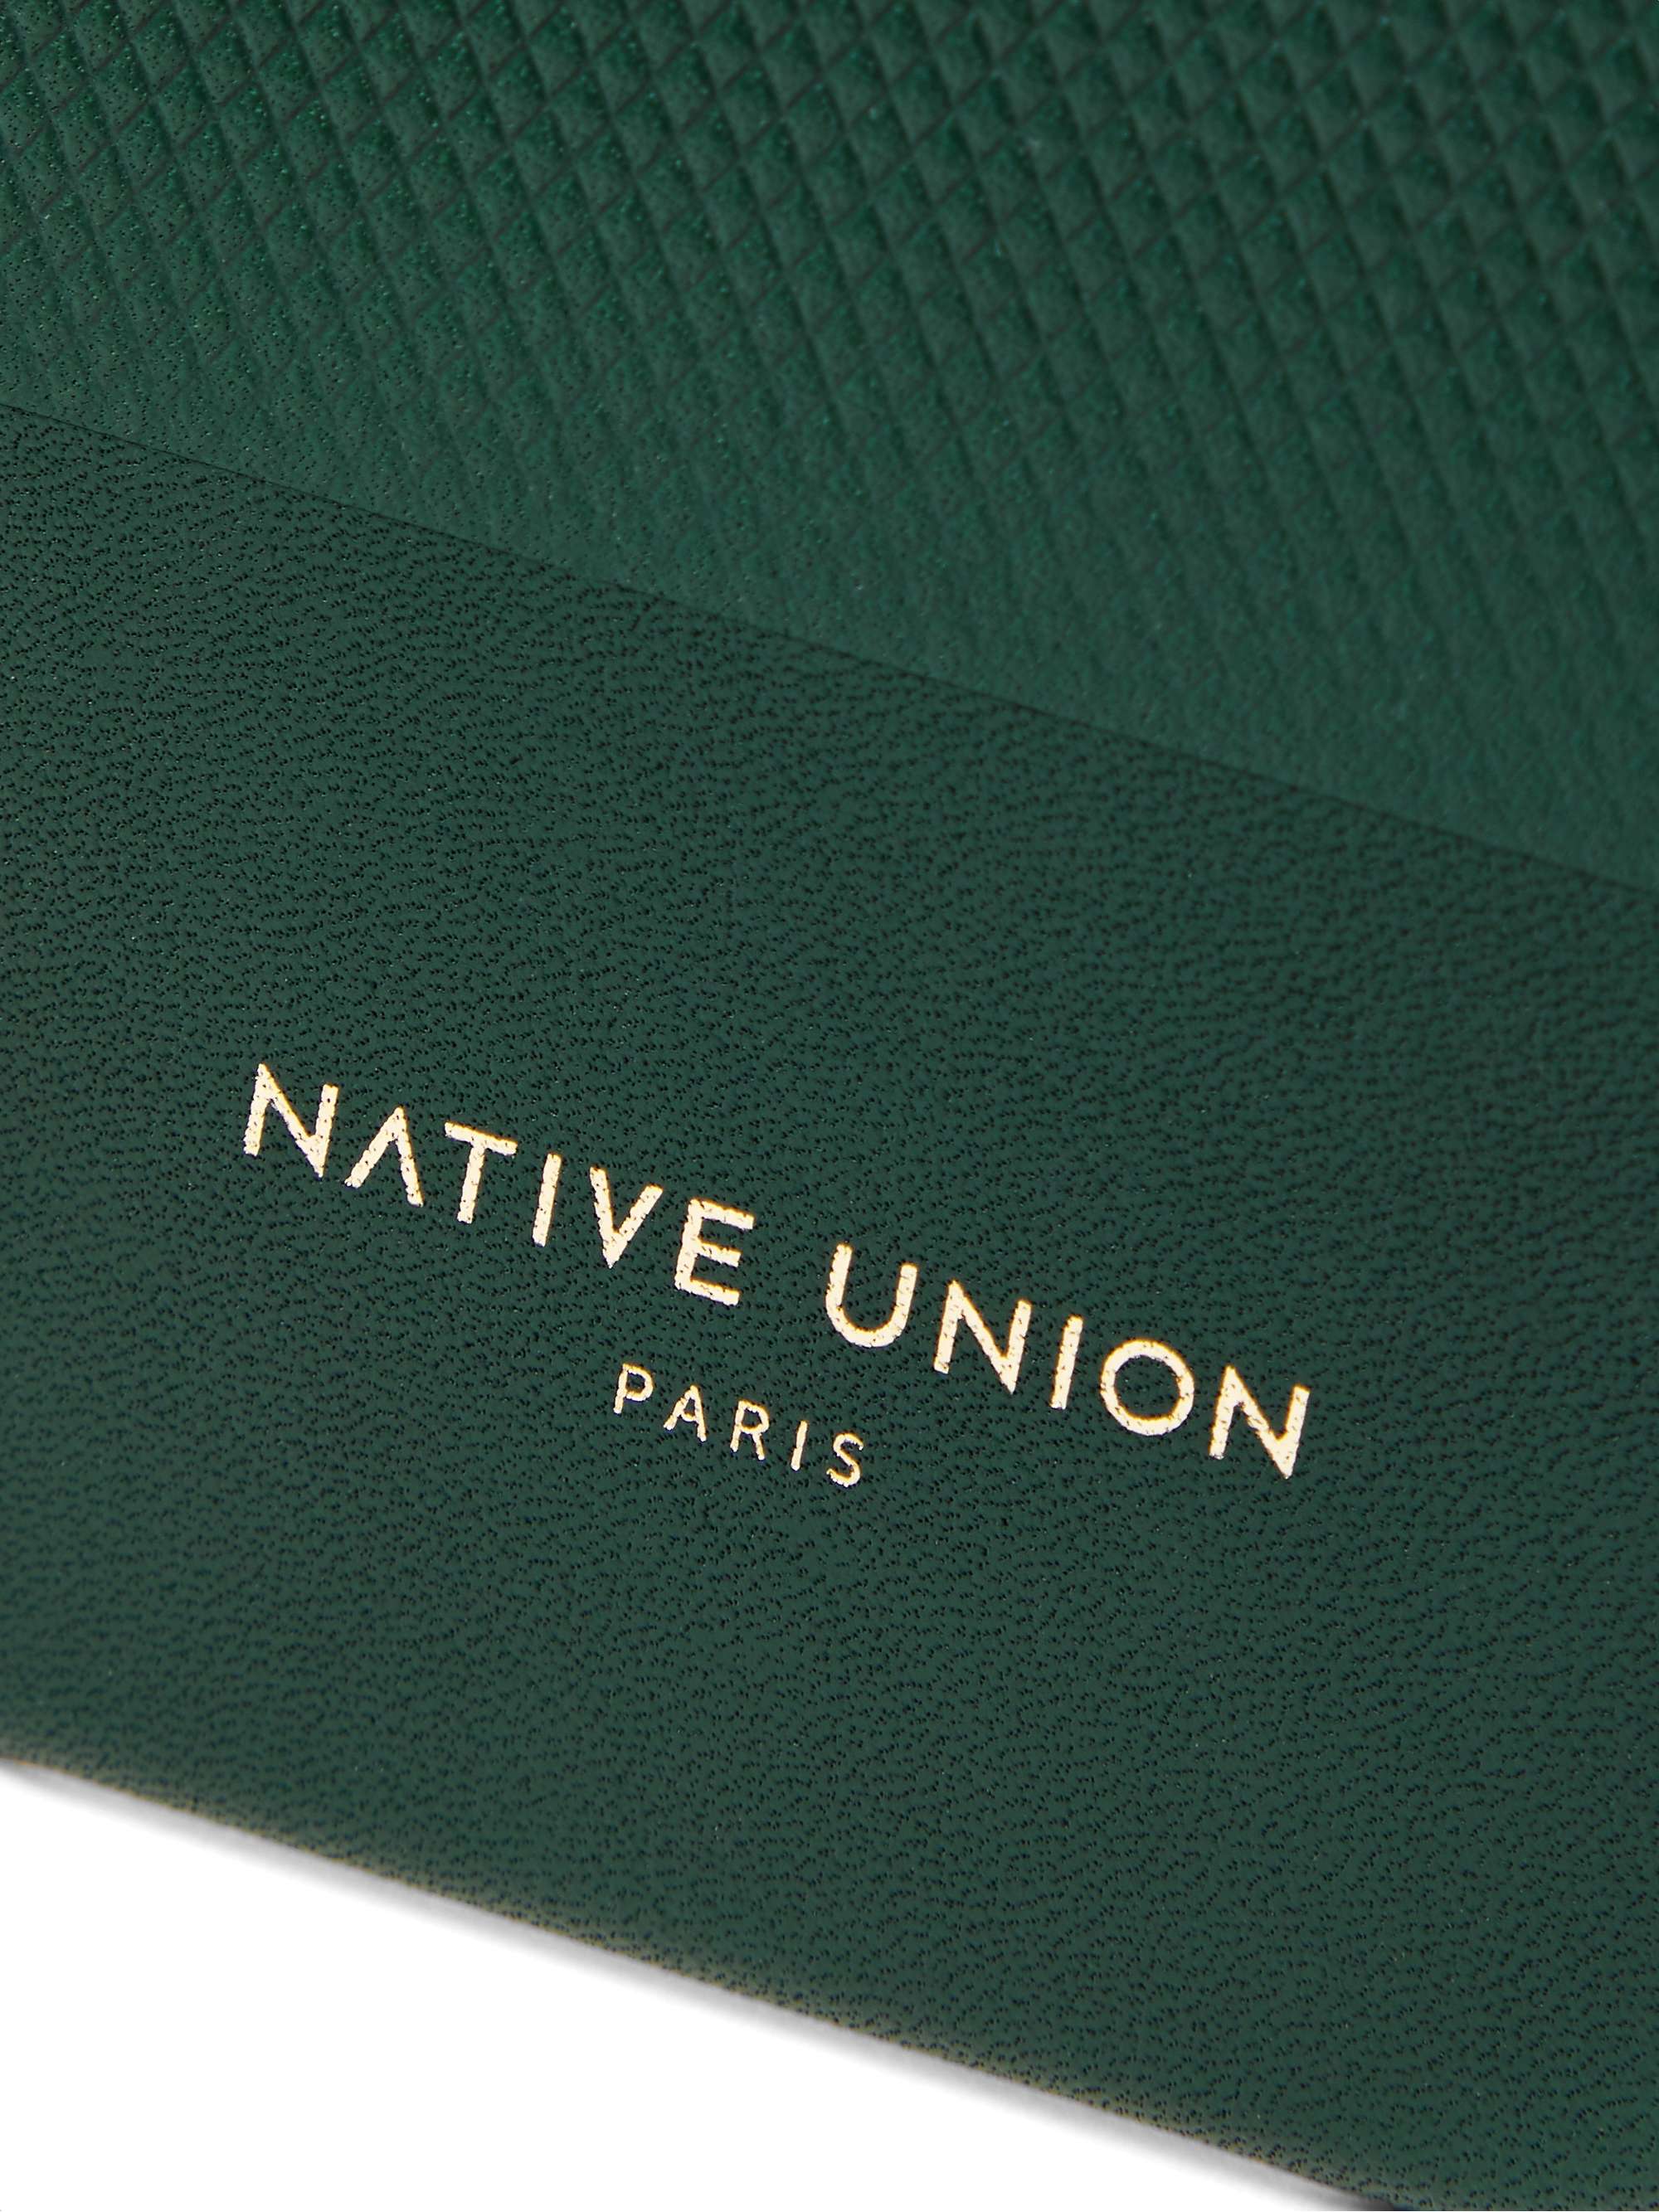 NATIVE UNION Clic Heritage Textured-Leather iPhone 12 Pro Case